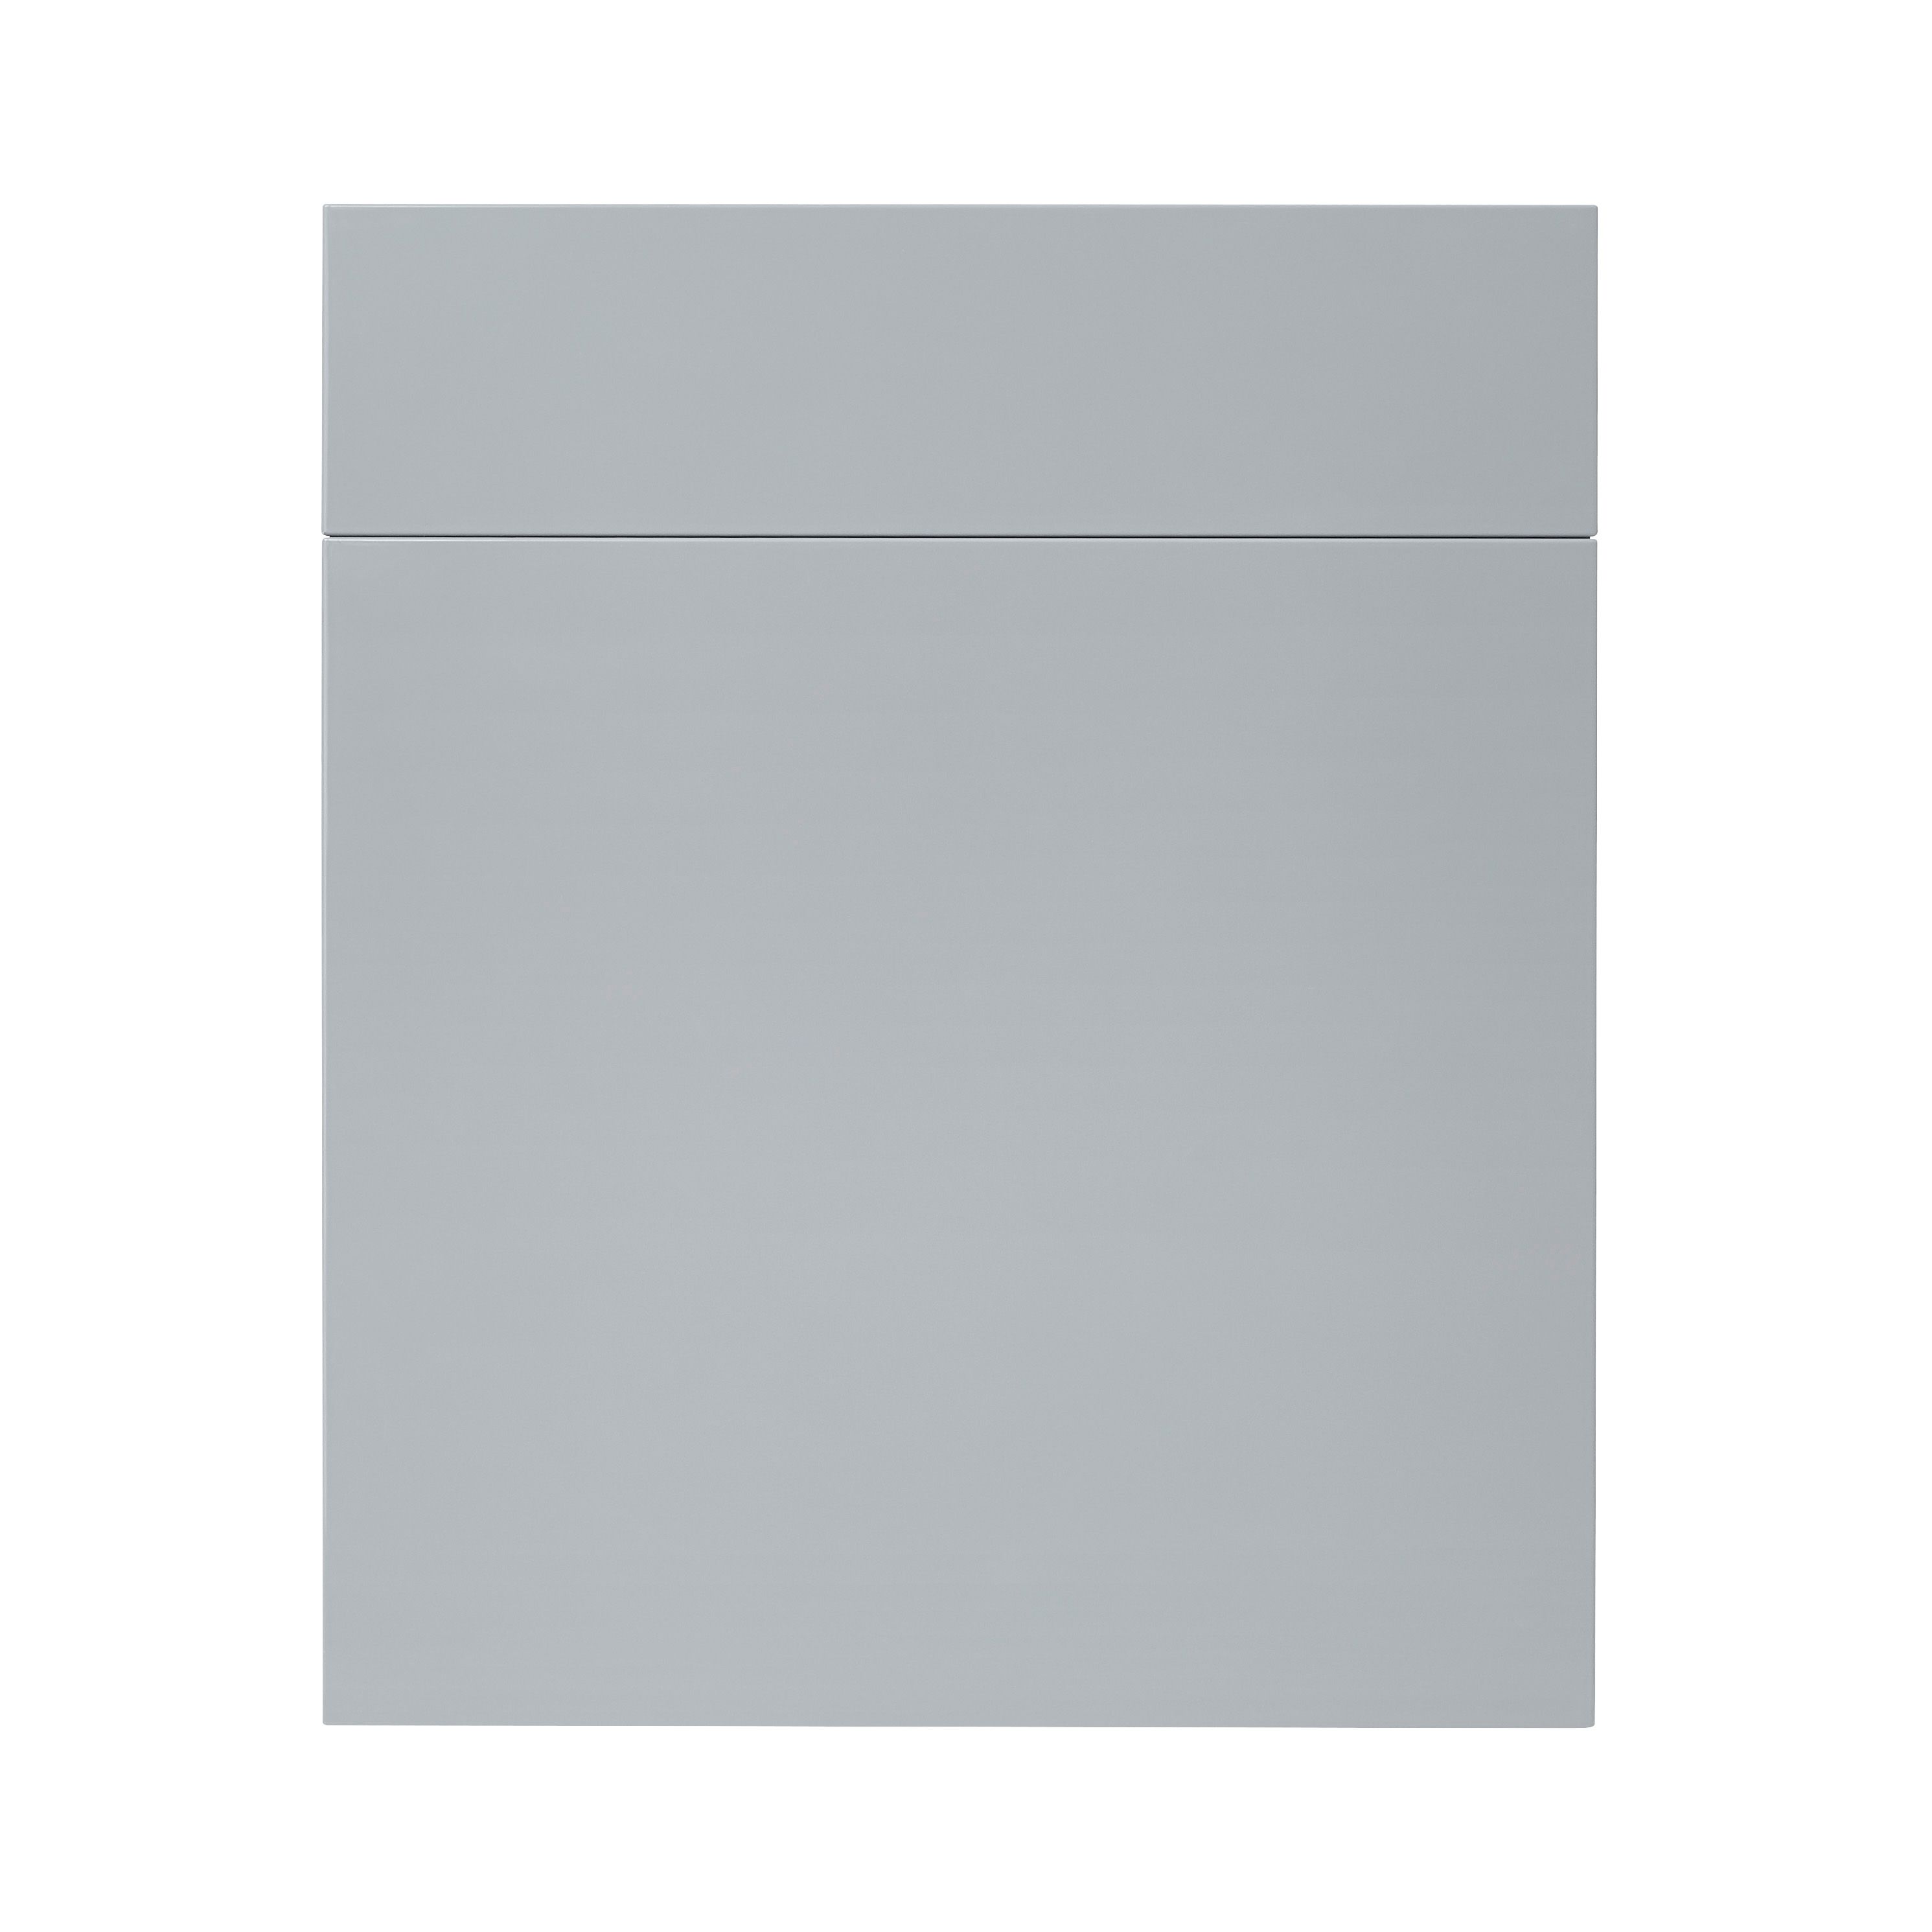 GoodHome Alisma High gloss grey Door & drawer, (W)600mm (H)715mm (T)18mm